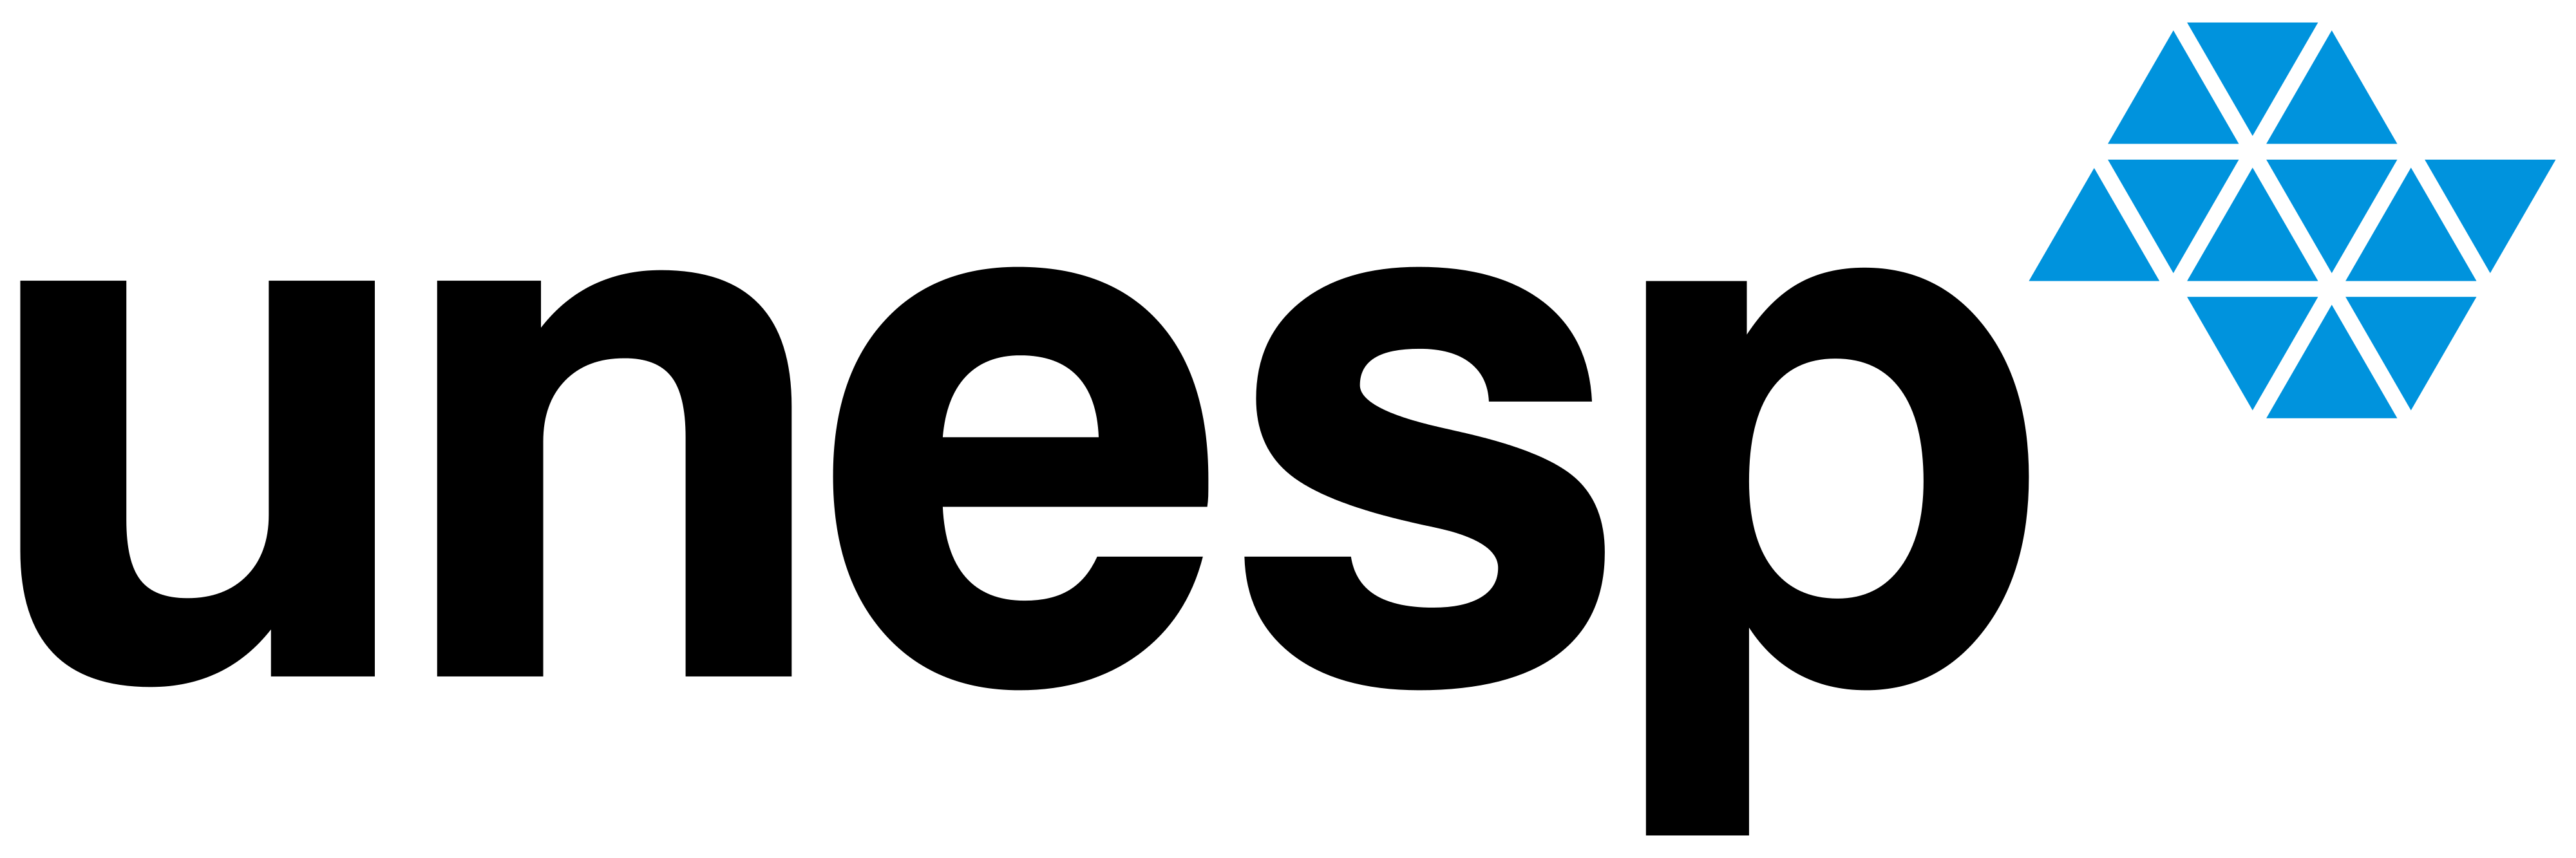 logo UNESP.png